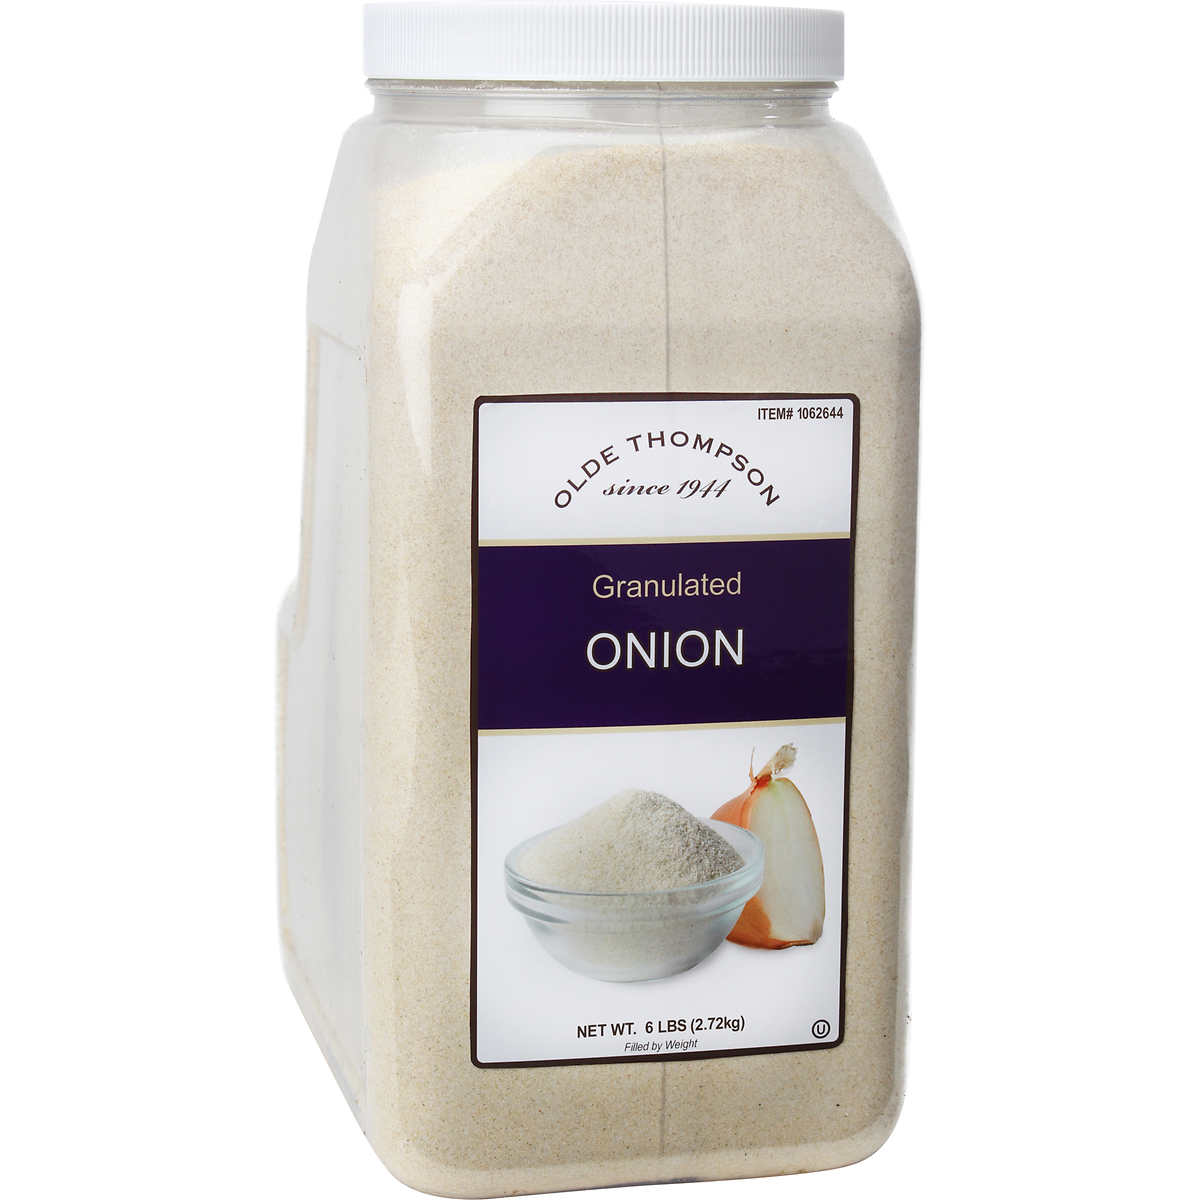 Casero, Chopped Onion, 5.6 oz (158 g)